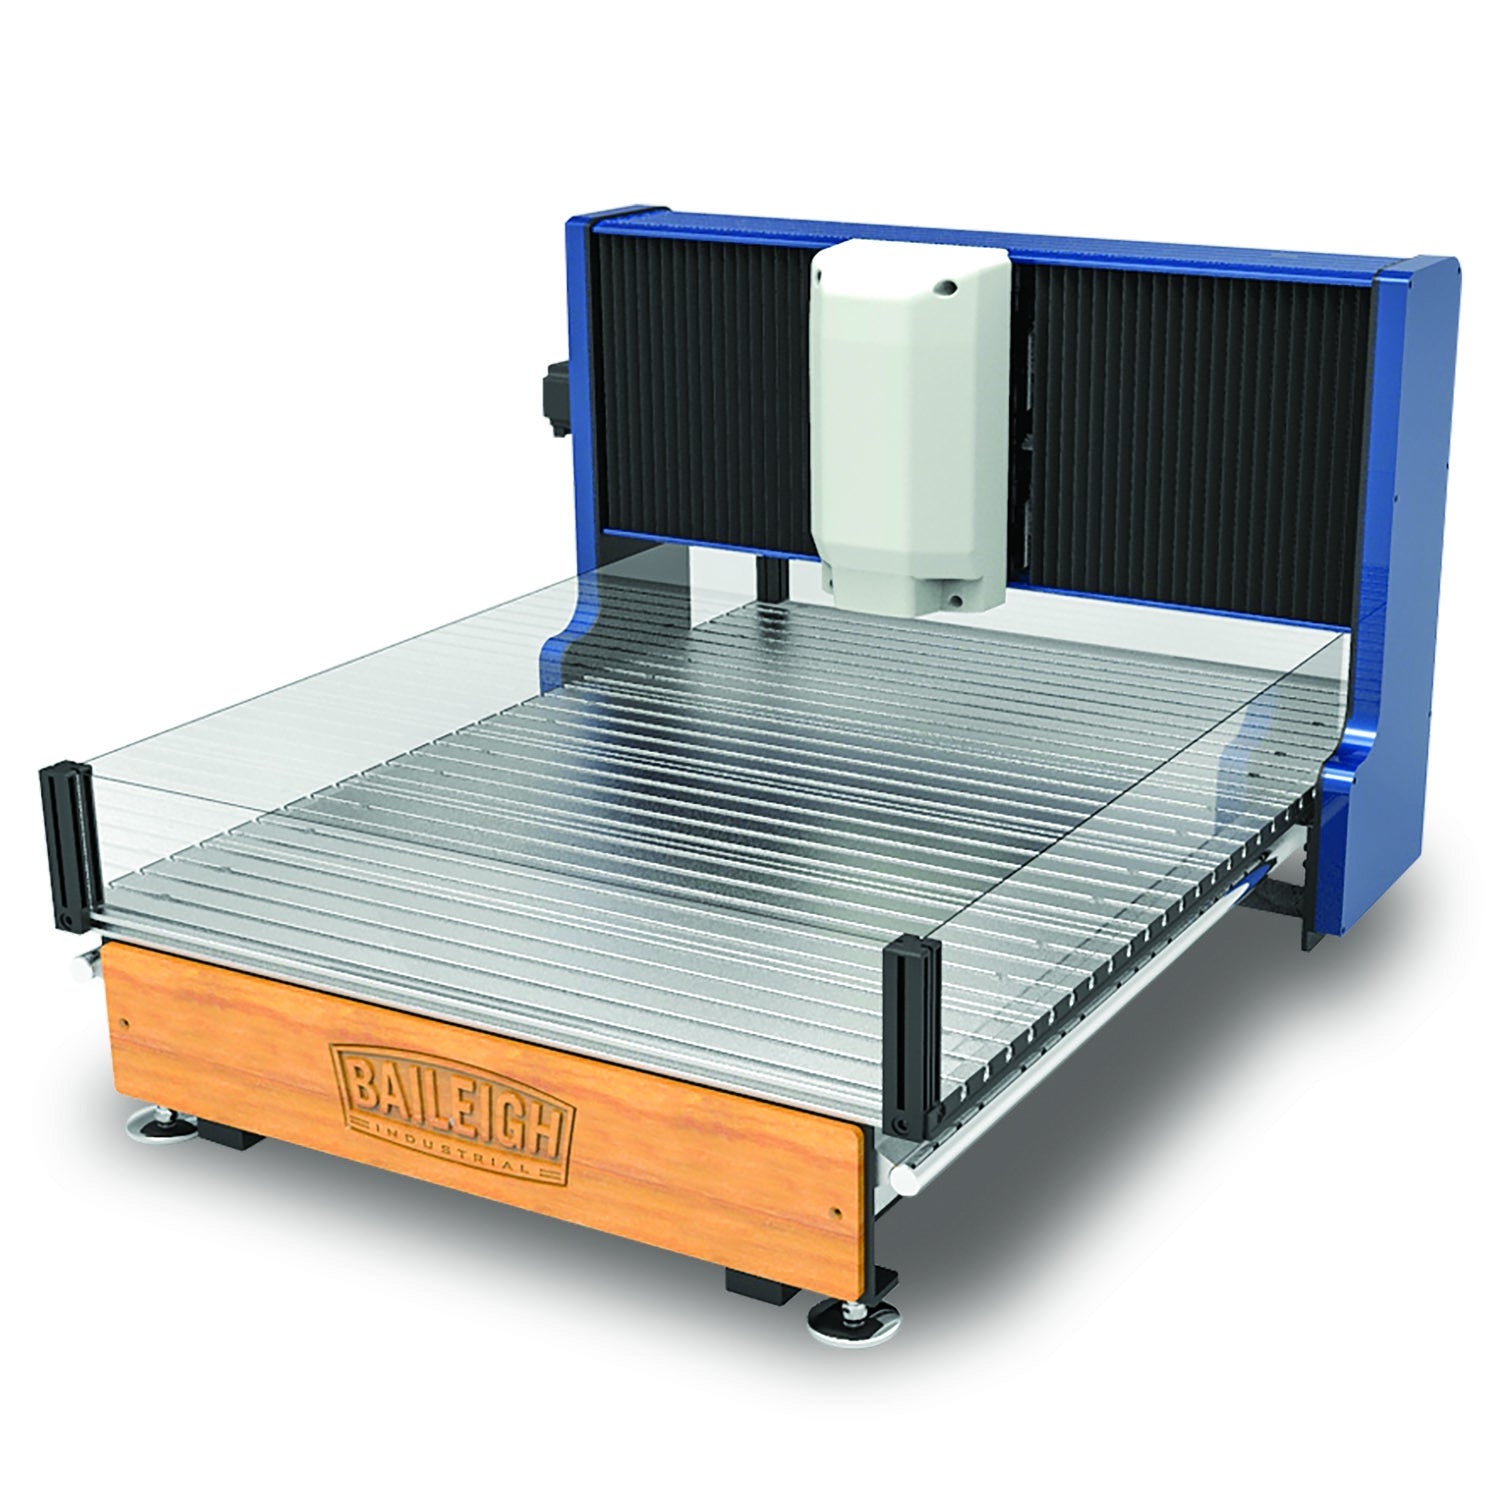 Baileigh DEM-2720 110V 27" x 20" CNC Desktop Engraver, Laser Ready (Sold Separately) w/ Software Package